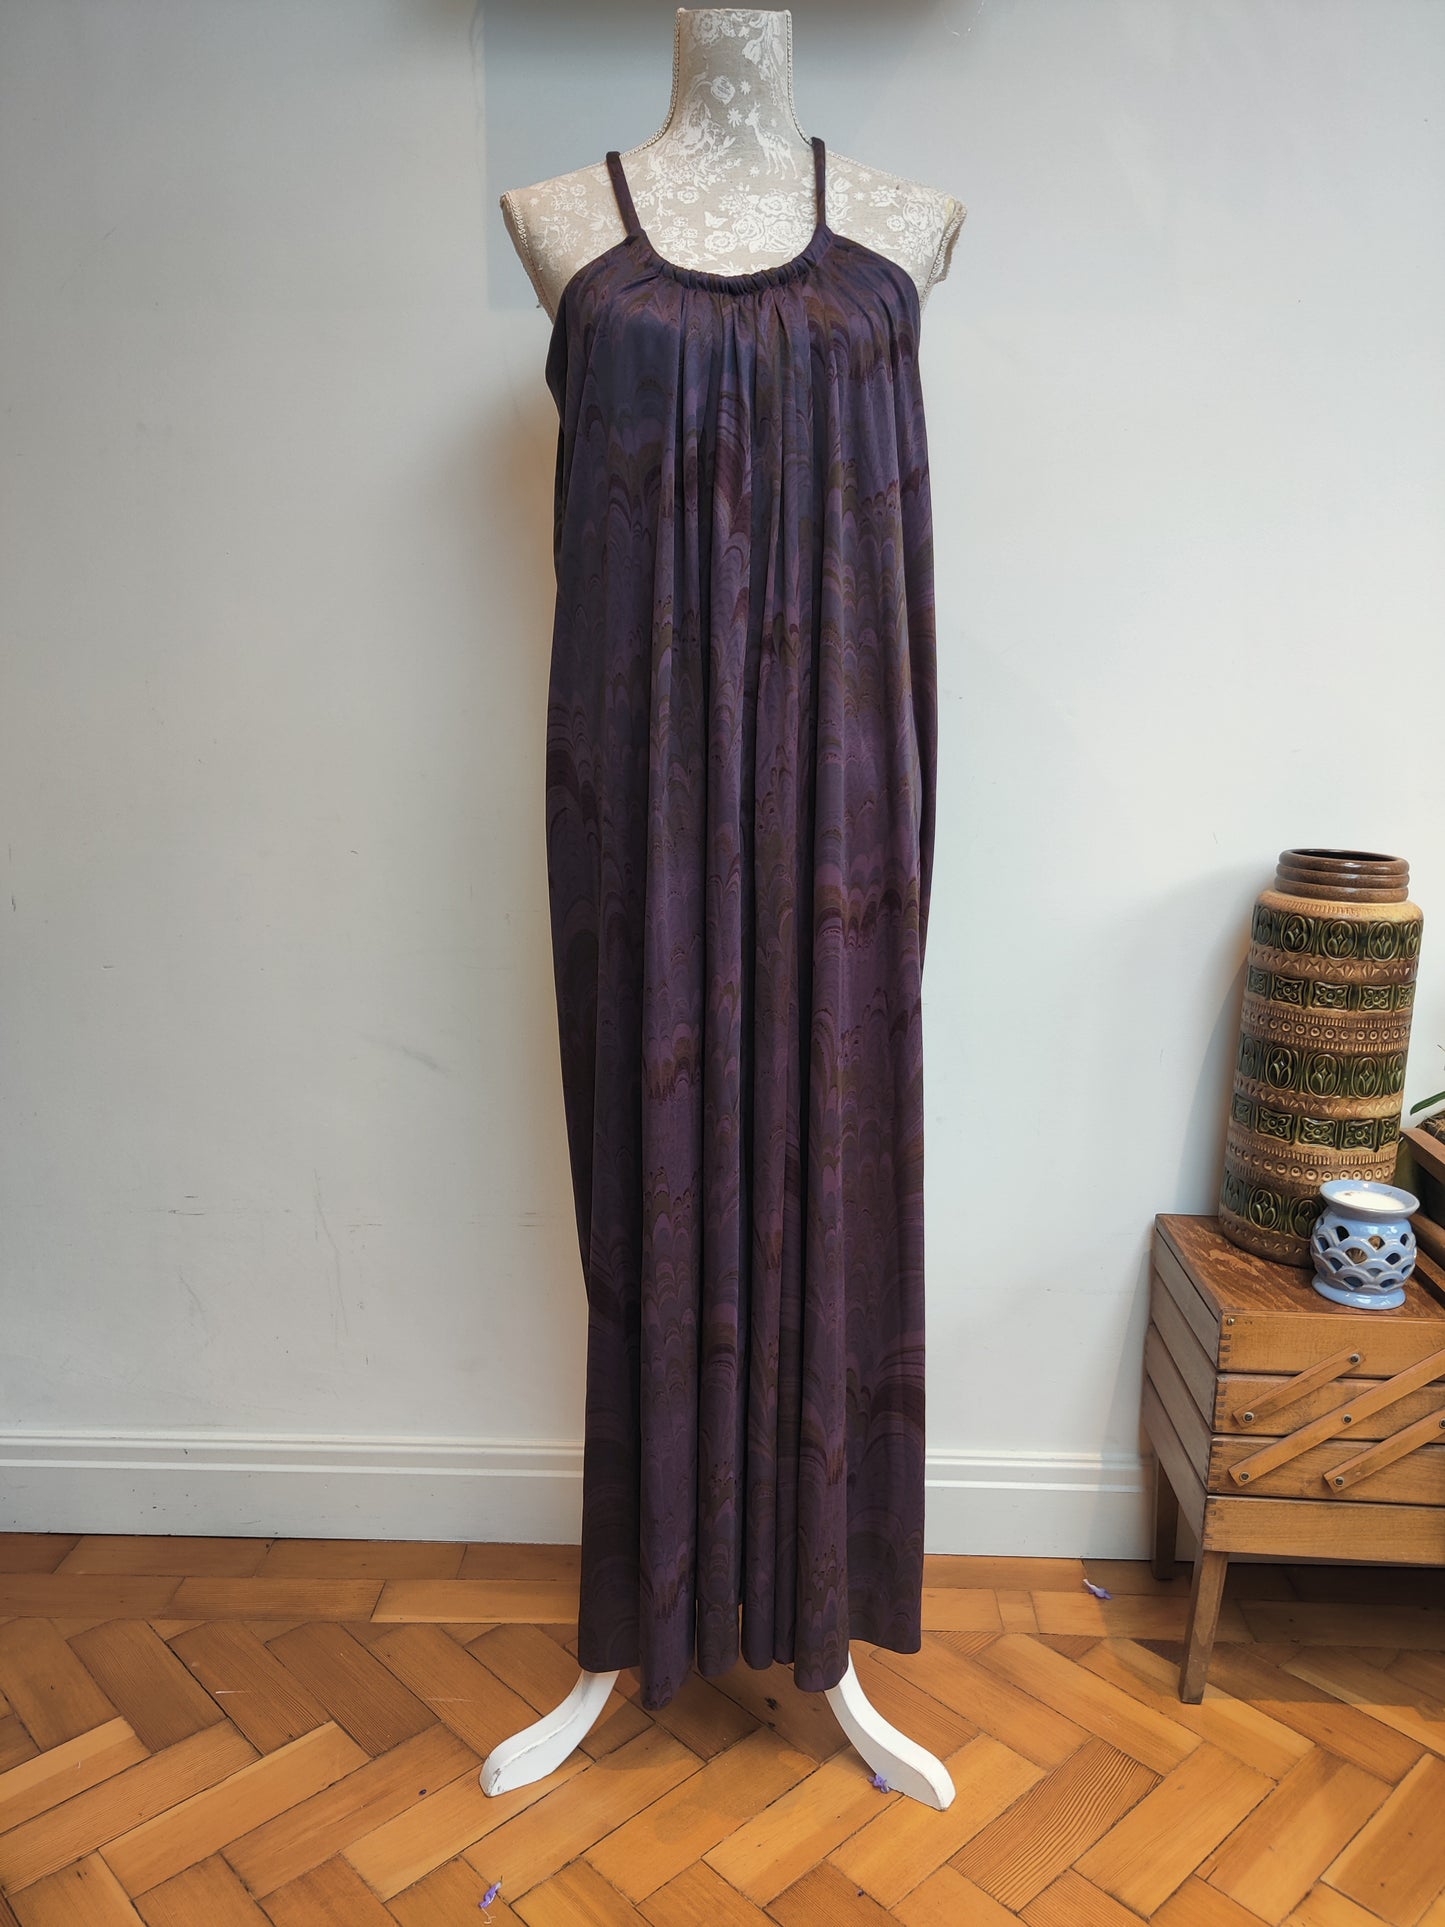 1970s maxi dress by Quad, size 12